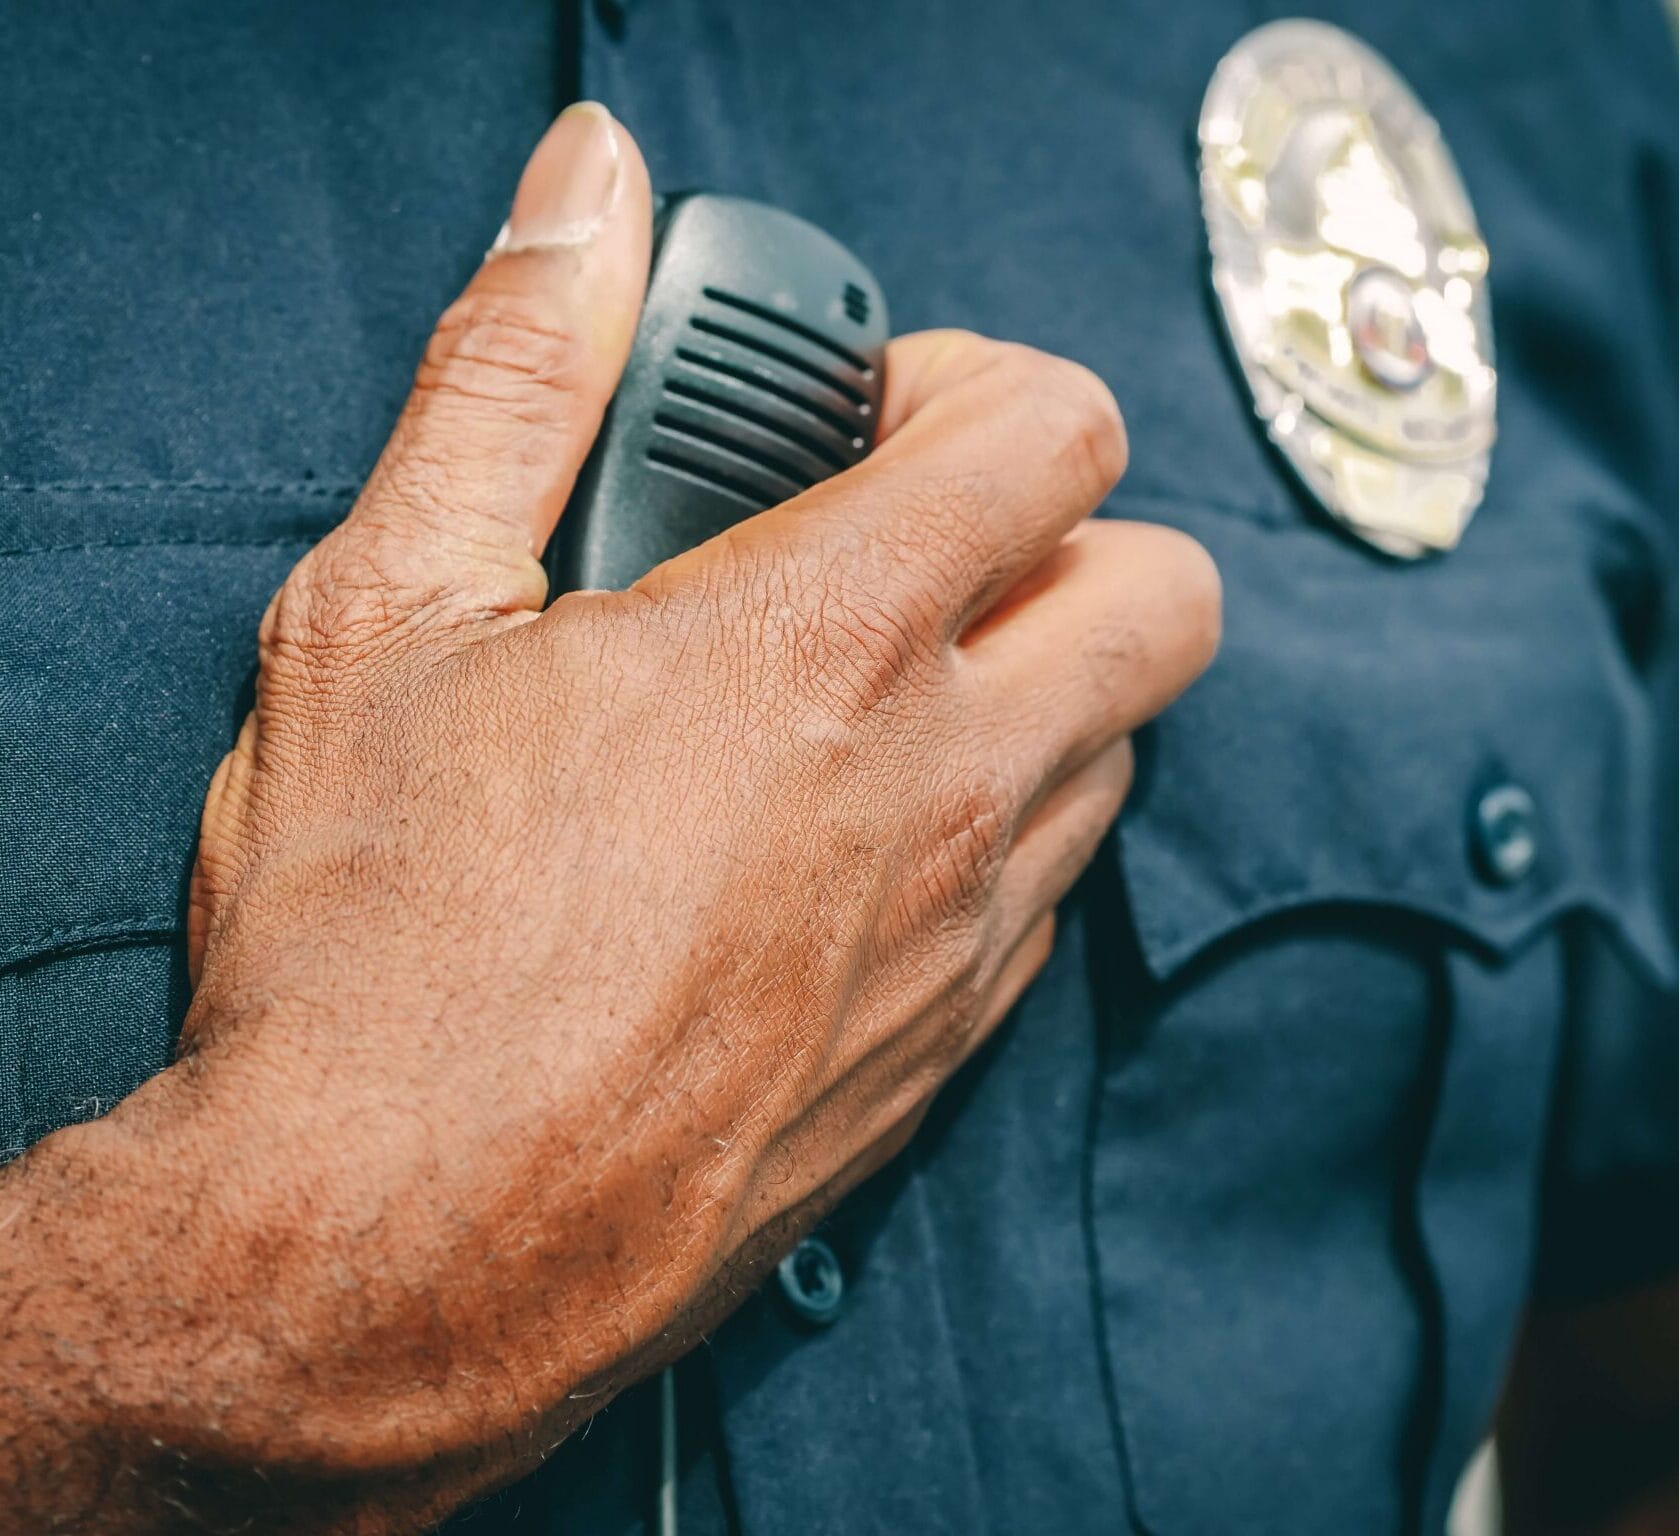 Public Safety Officer Positions in Farmington Mi | POAM Law Enforcement Careers